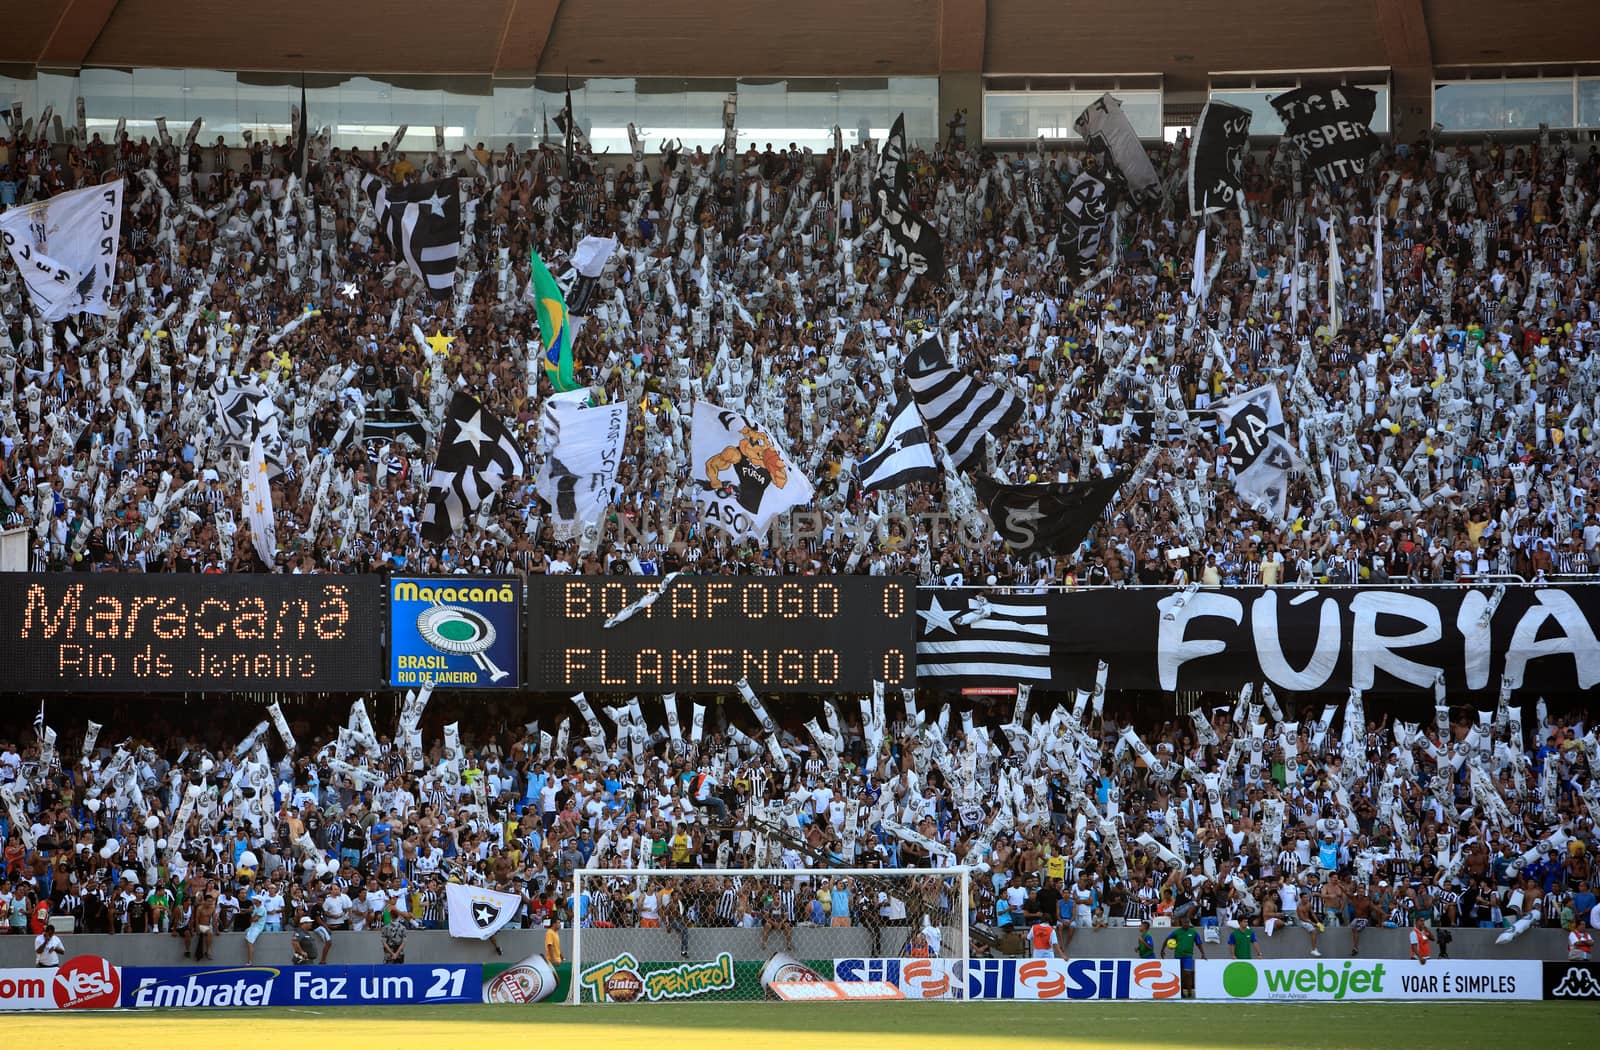 Botafogo supporters maracana stadium Rio de Janeiro Brazil by PIXSTILL